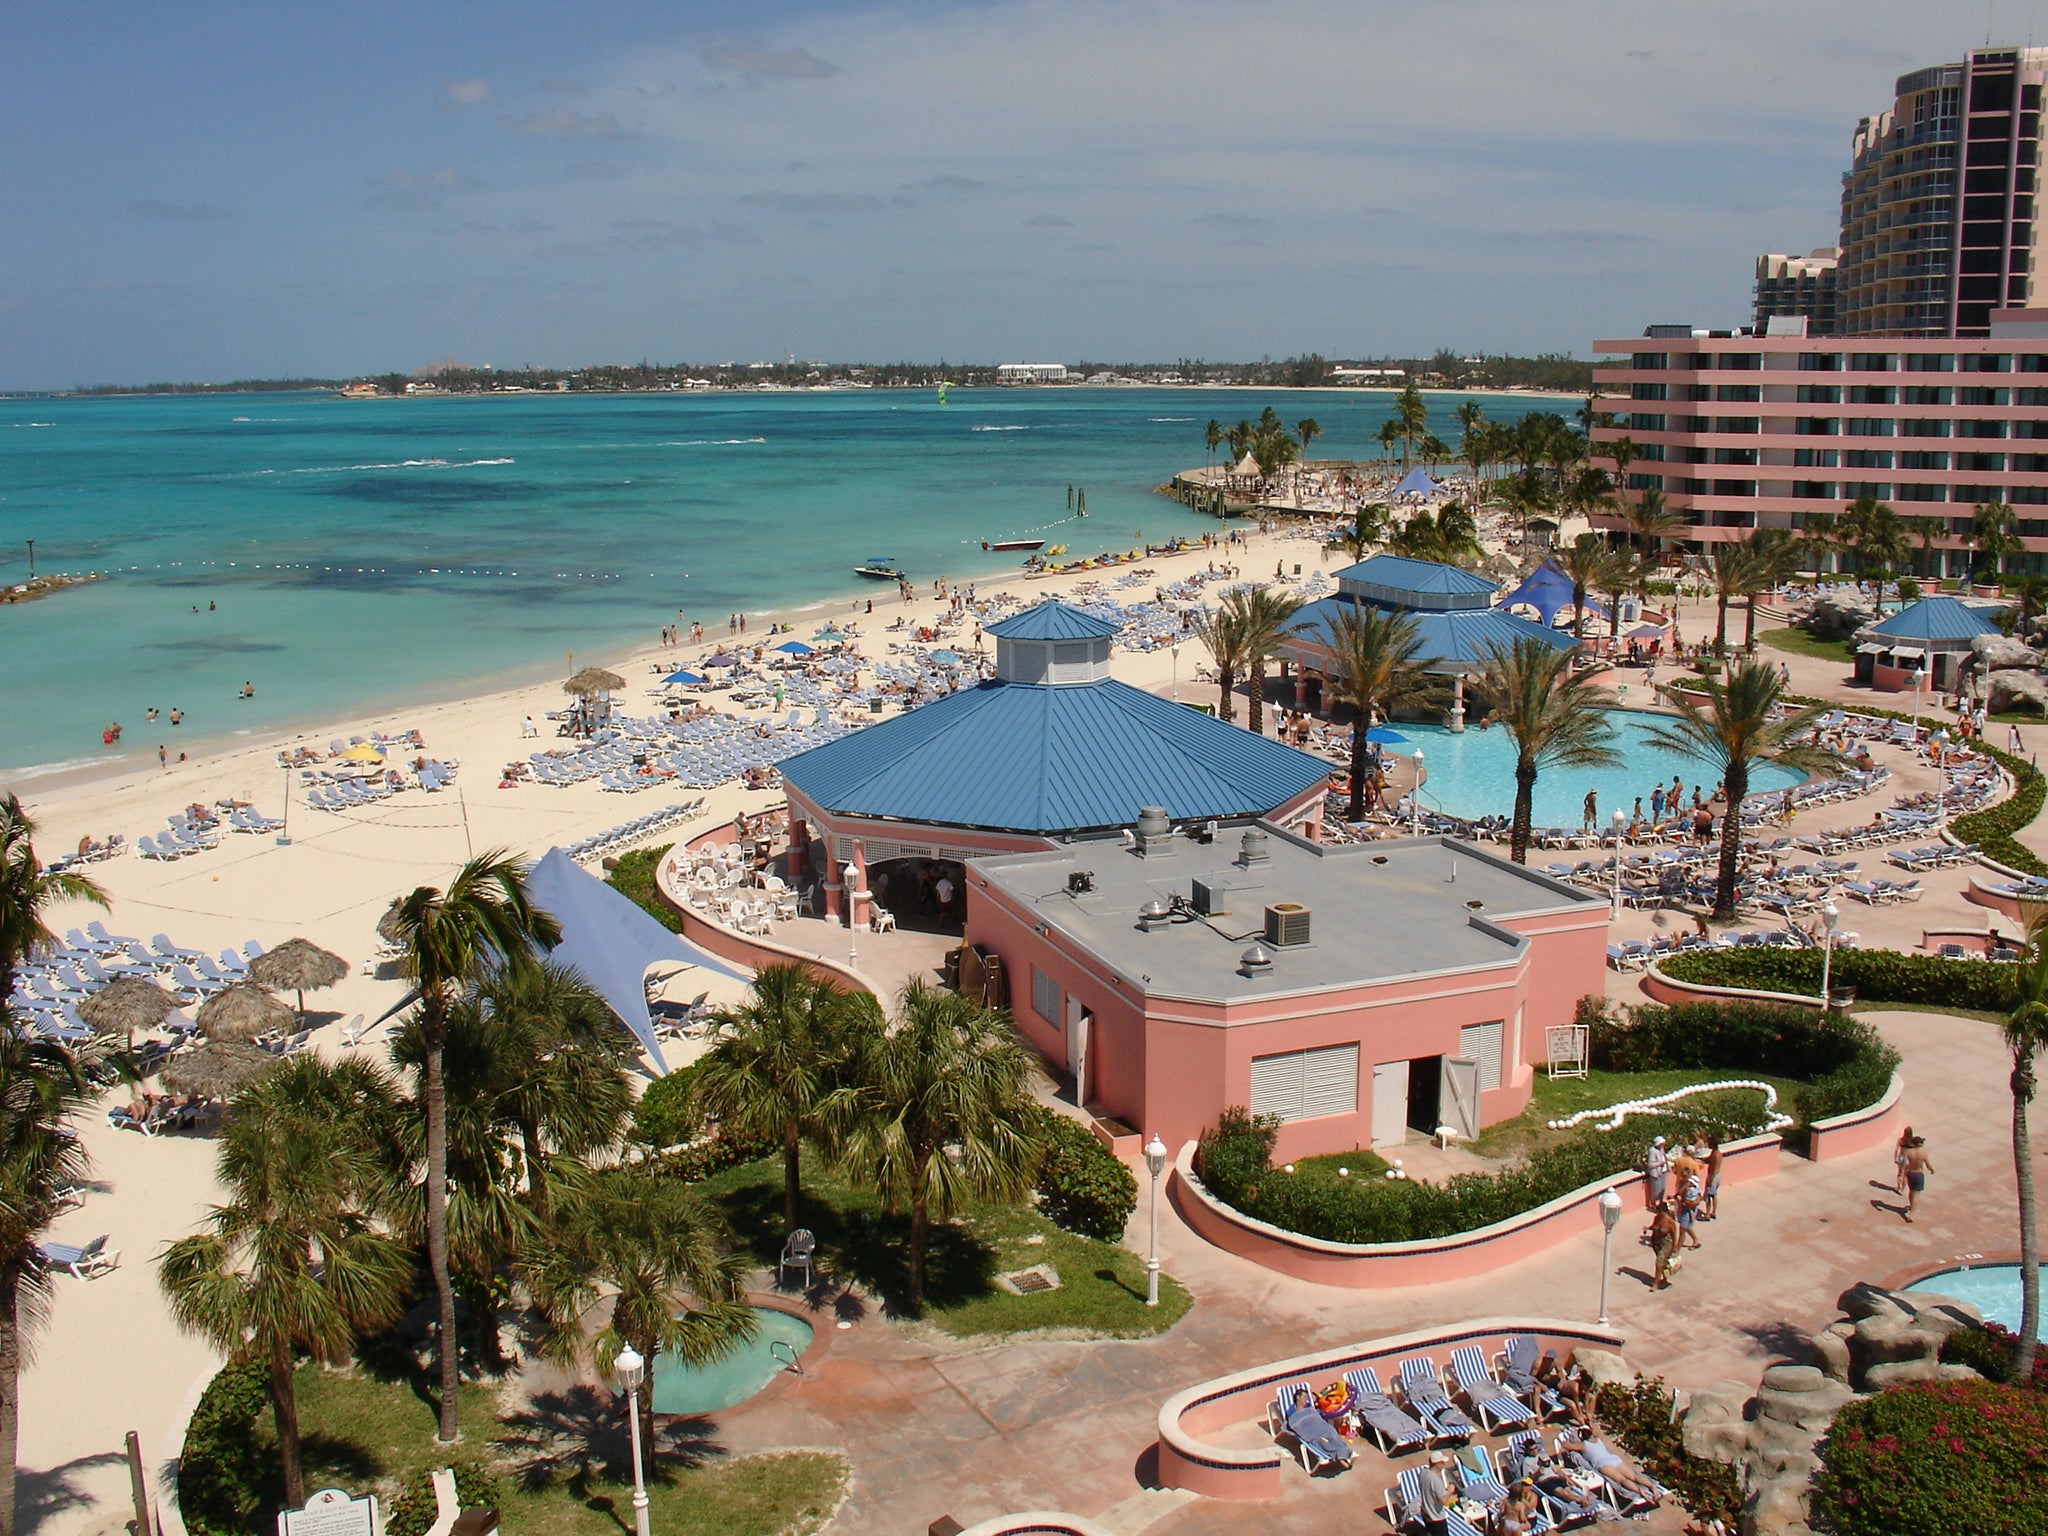 The Bahamas: a convenient jurisdiction for super-rich Americans